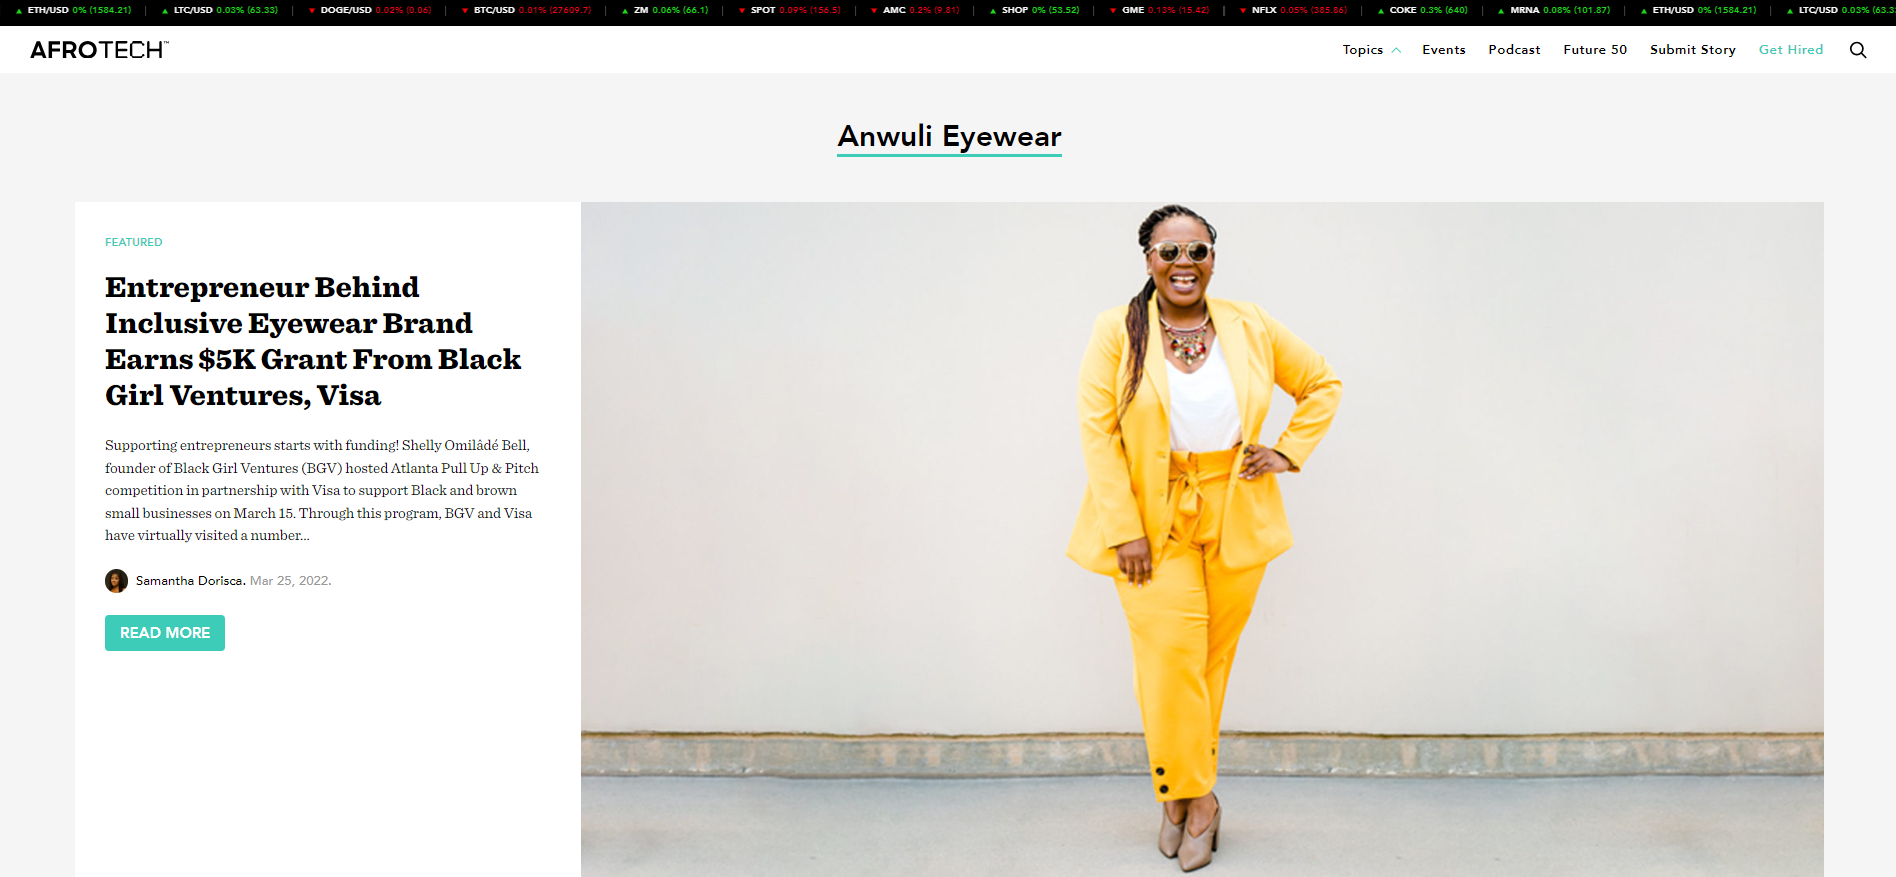 AfroTech Article on Anwui Eyewear